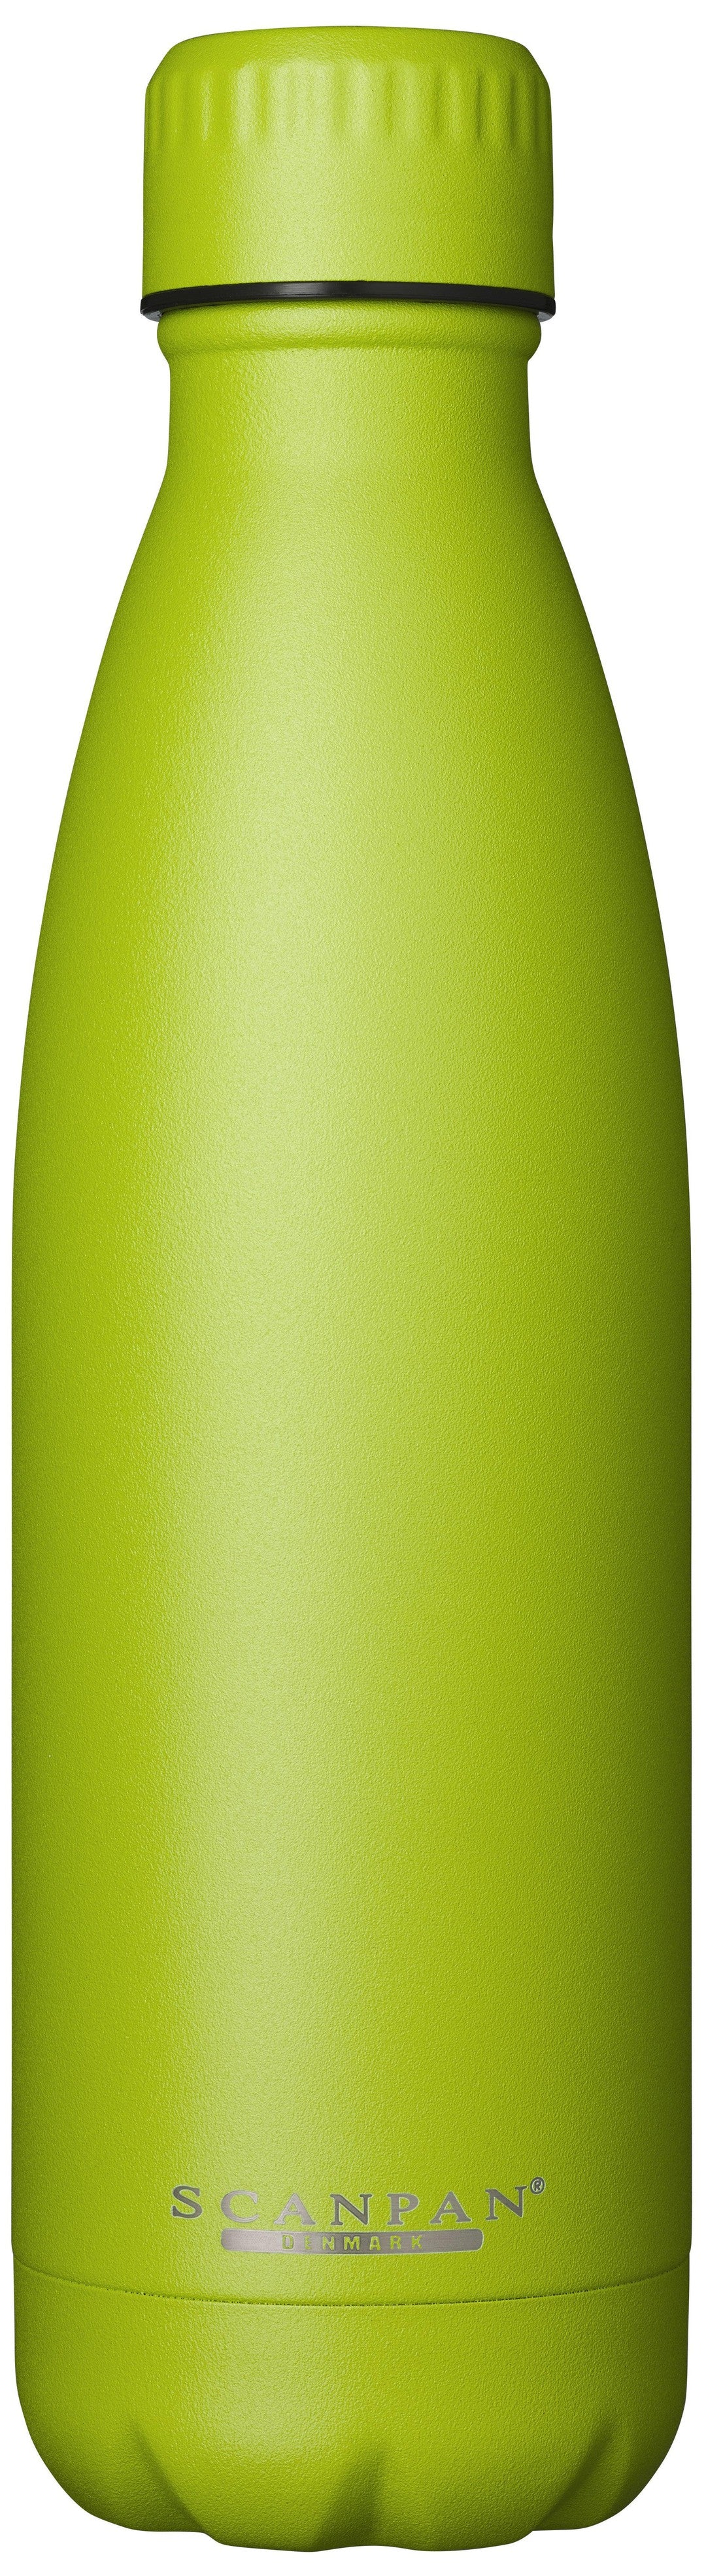 Scanpan To Go Termoflaske - 500ml - Aluminium - Lime Green